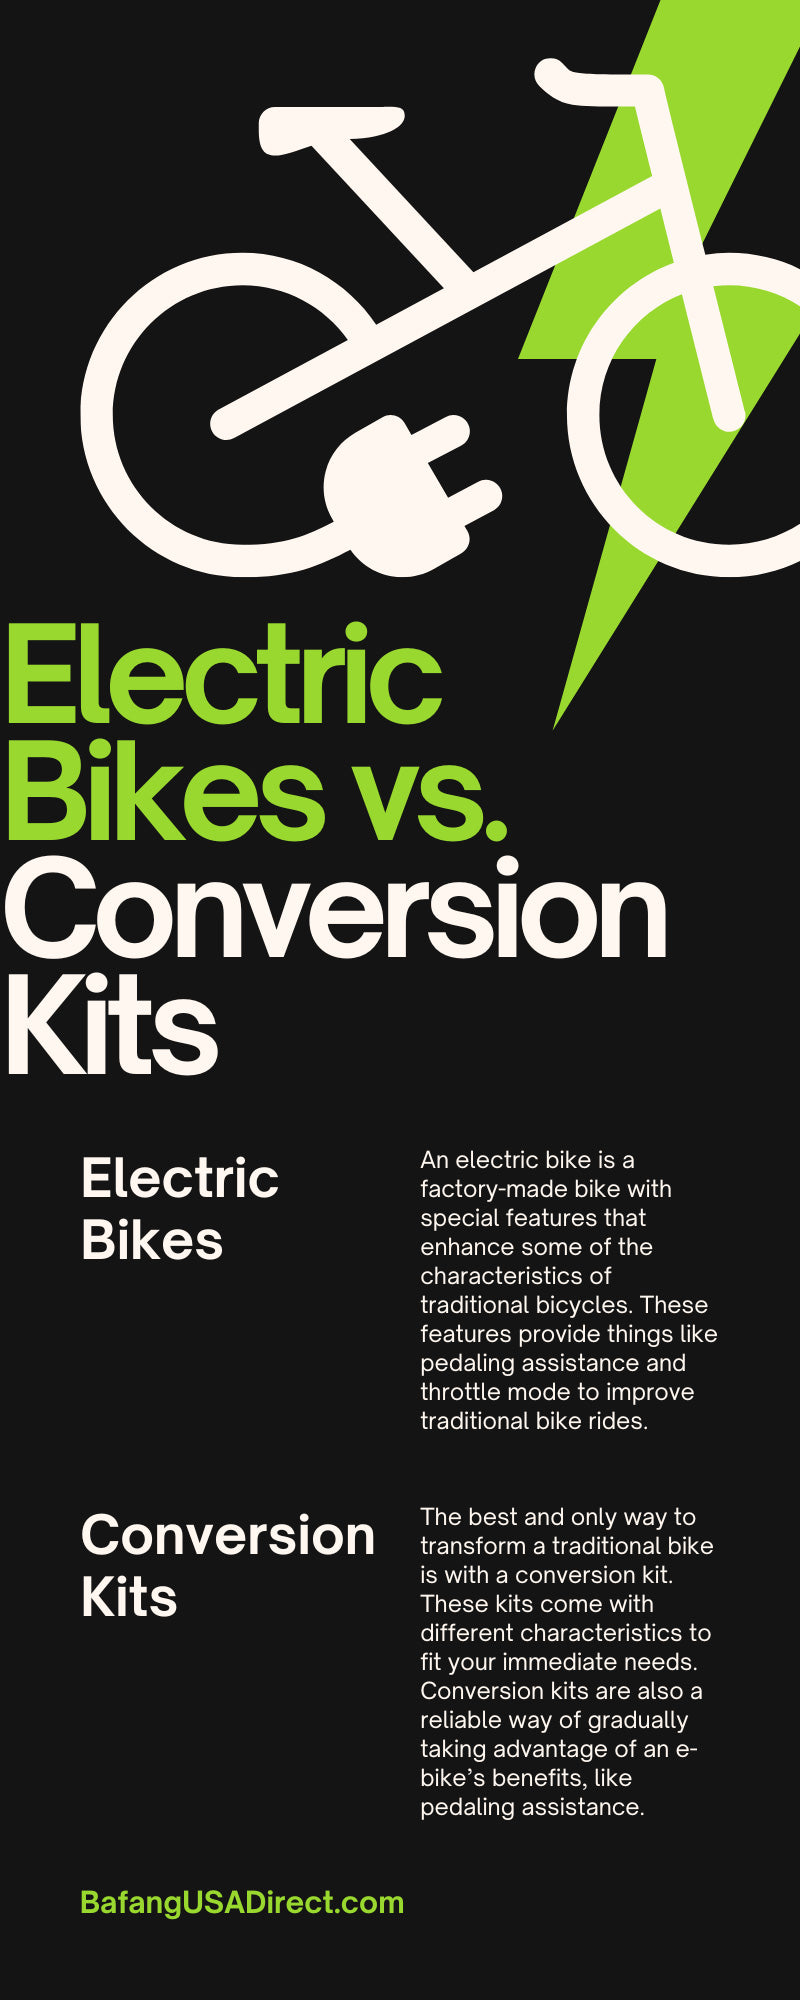 A Complete Breakdown of Electric Bikes vs. Conversion Kits